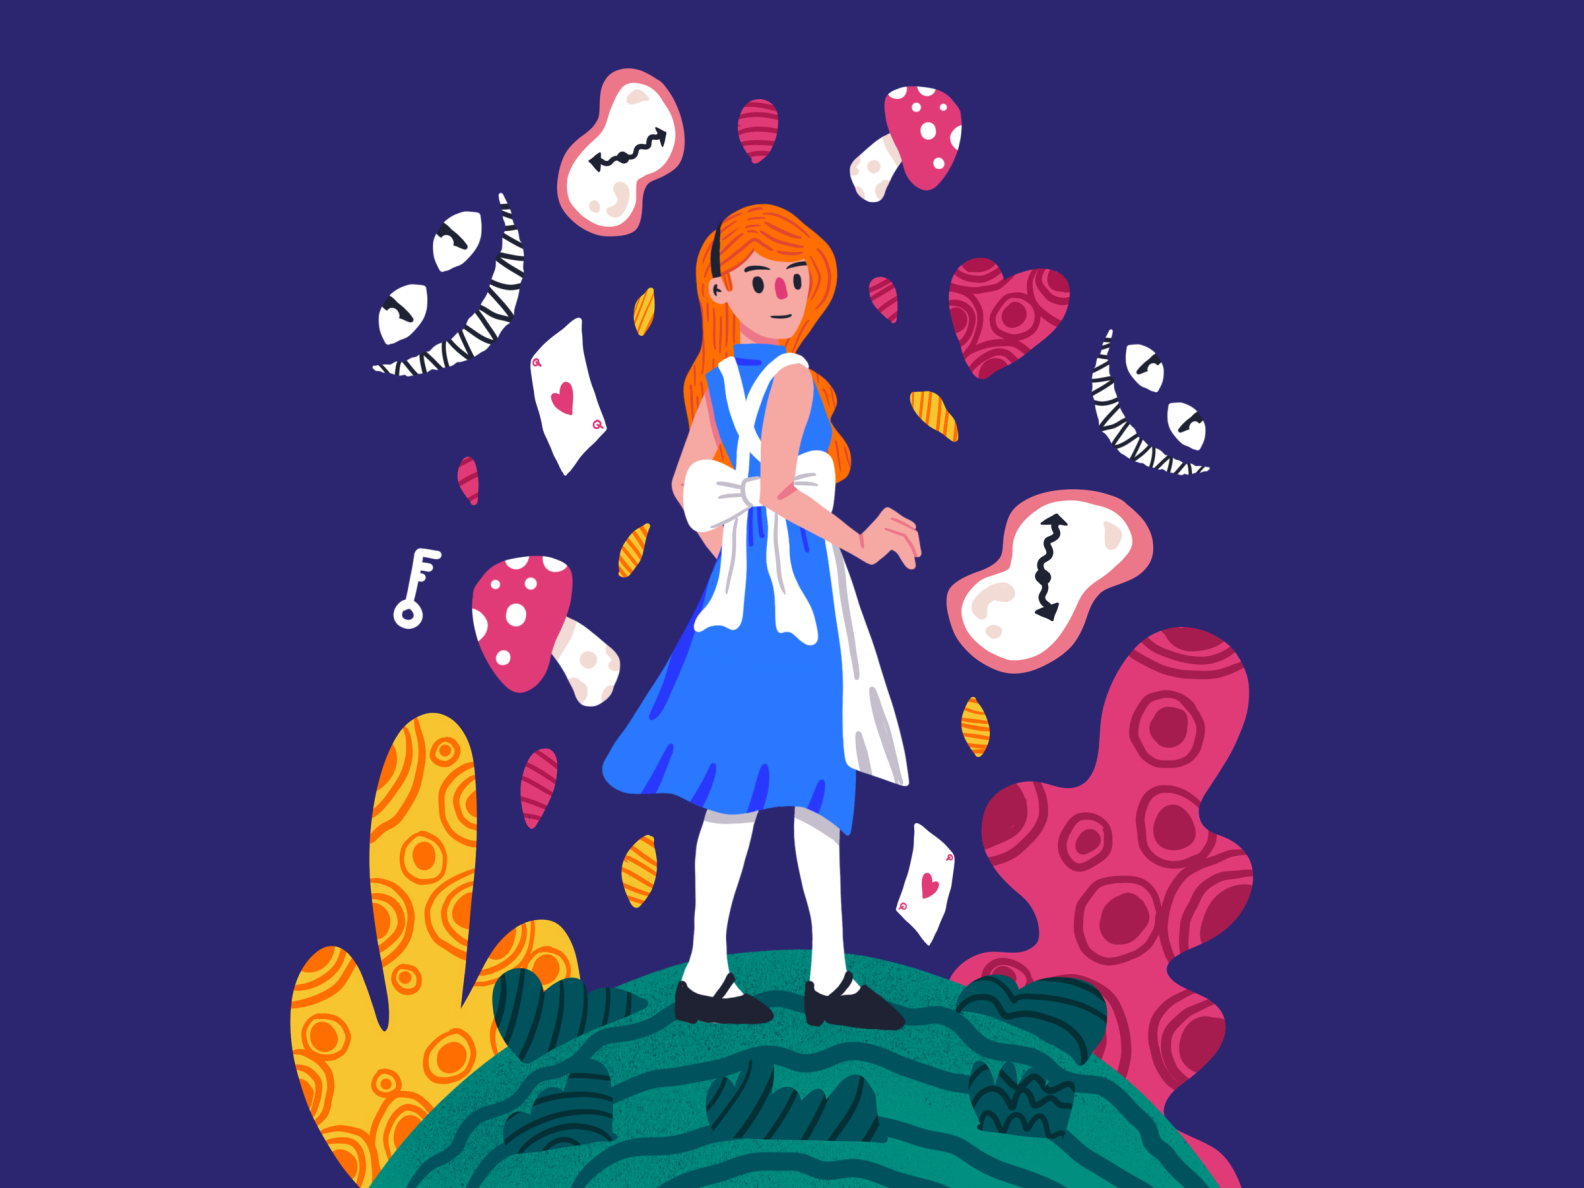 Alice in Wonderland by Alver Hothasi on Dribbble